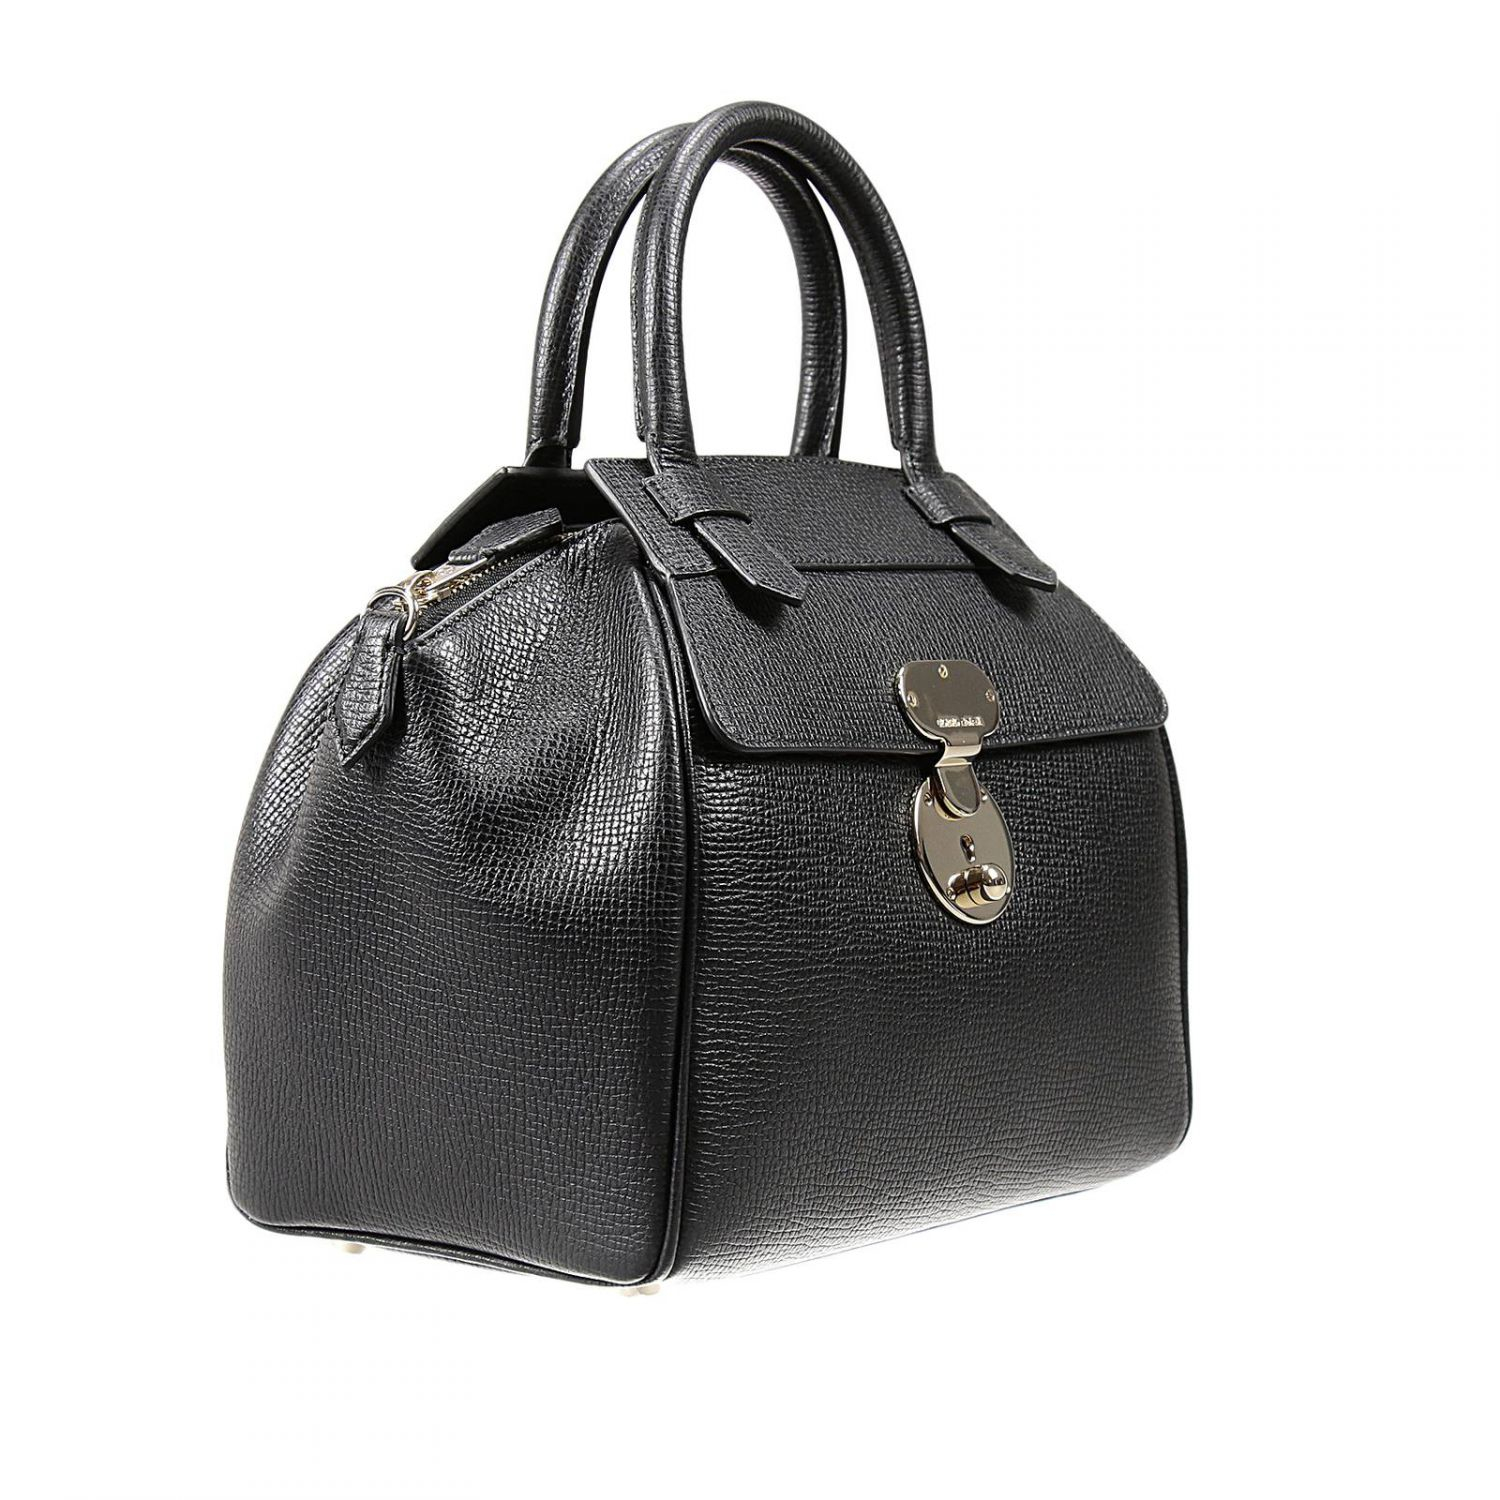 Giorgio armani Handbag in Black - Save 50% | Lyst